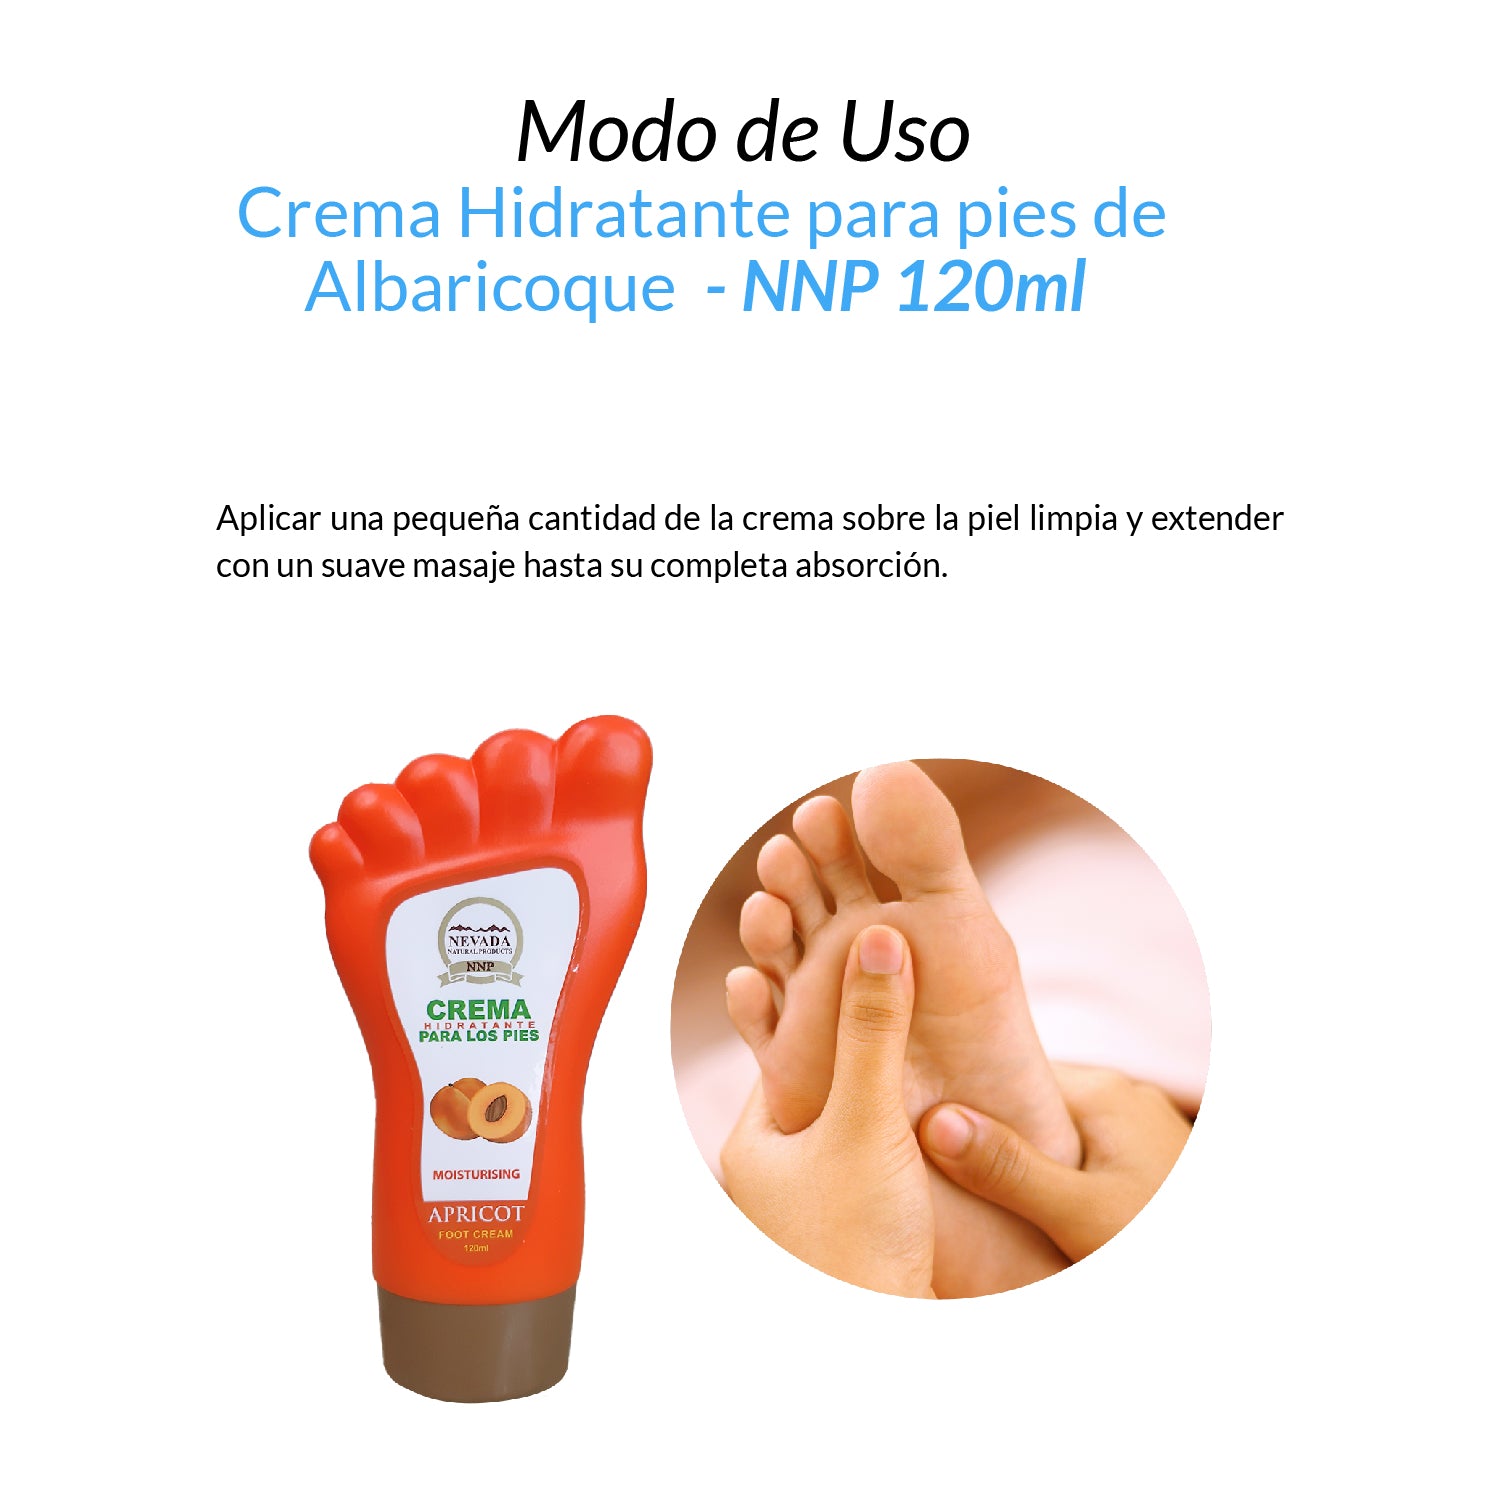 Crema Hidratante para pies de Albaricoque - NNP 120ml